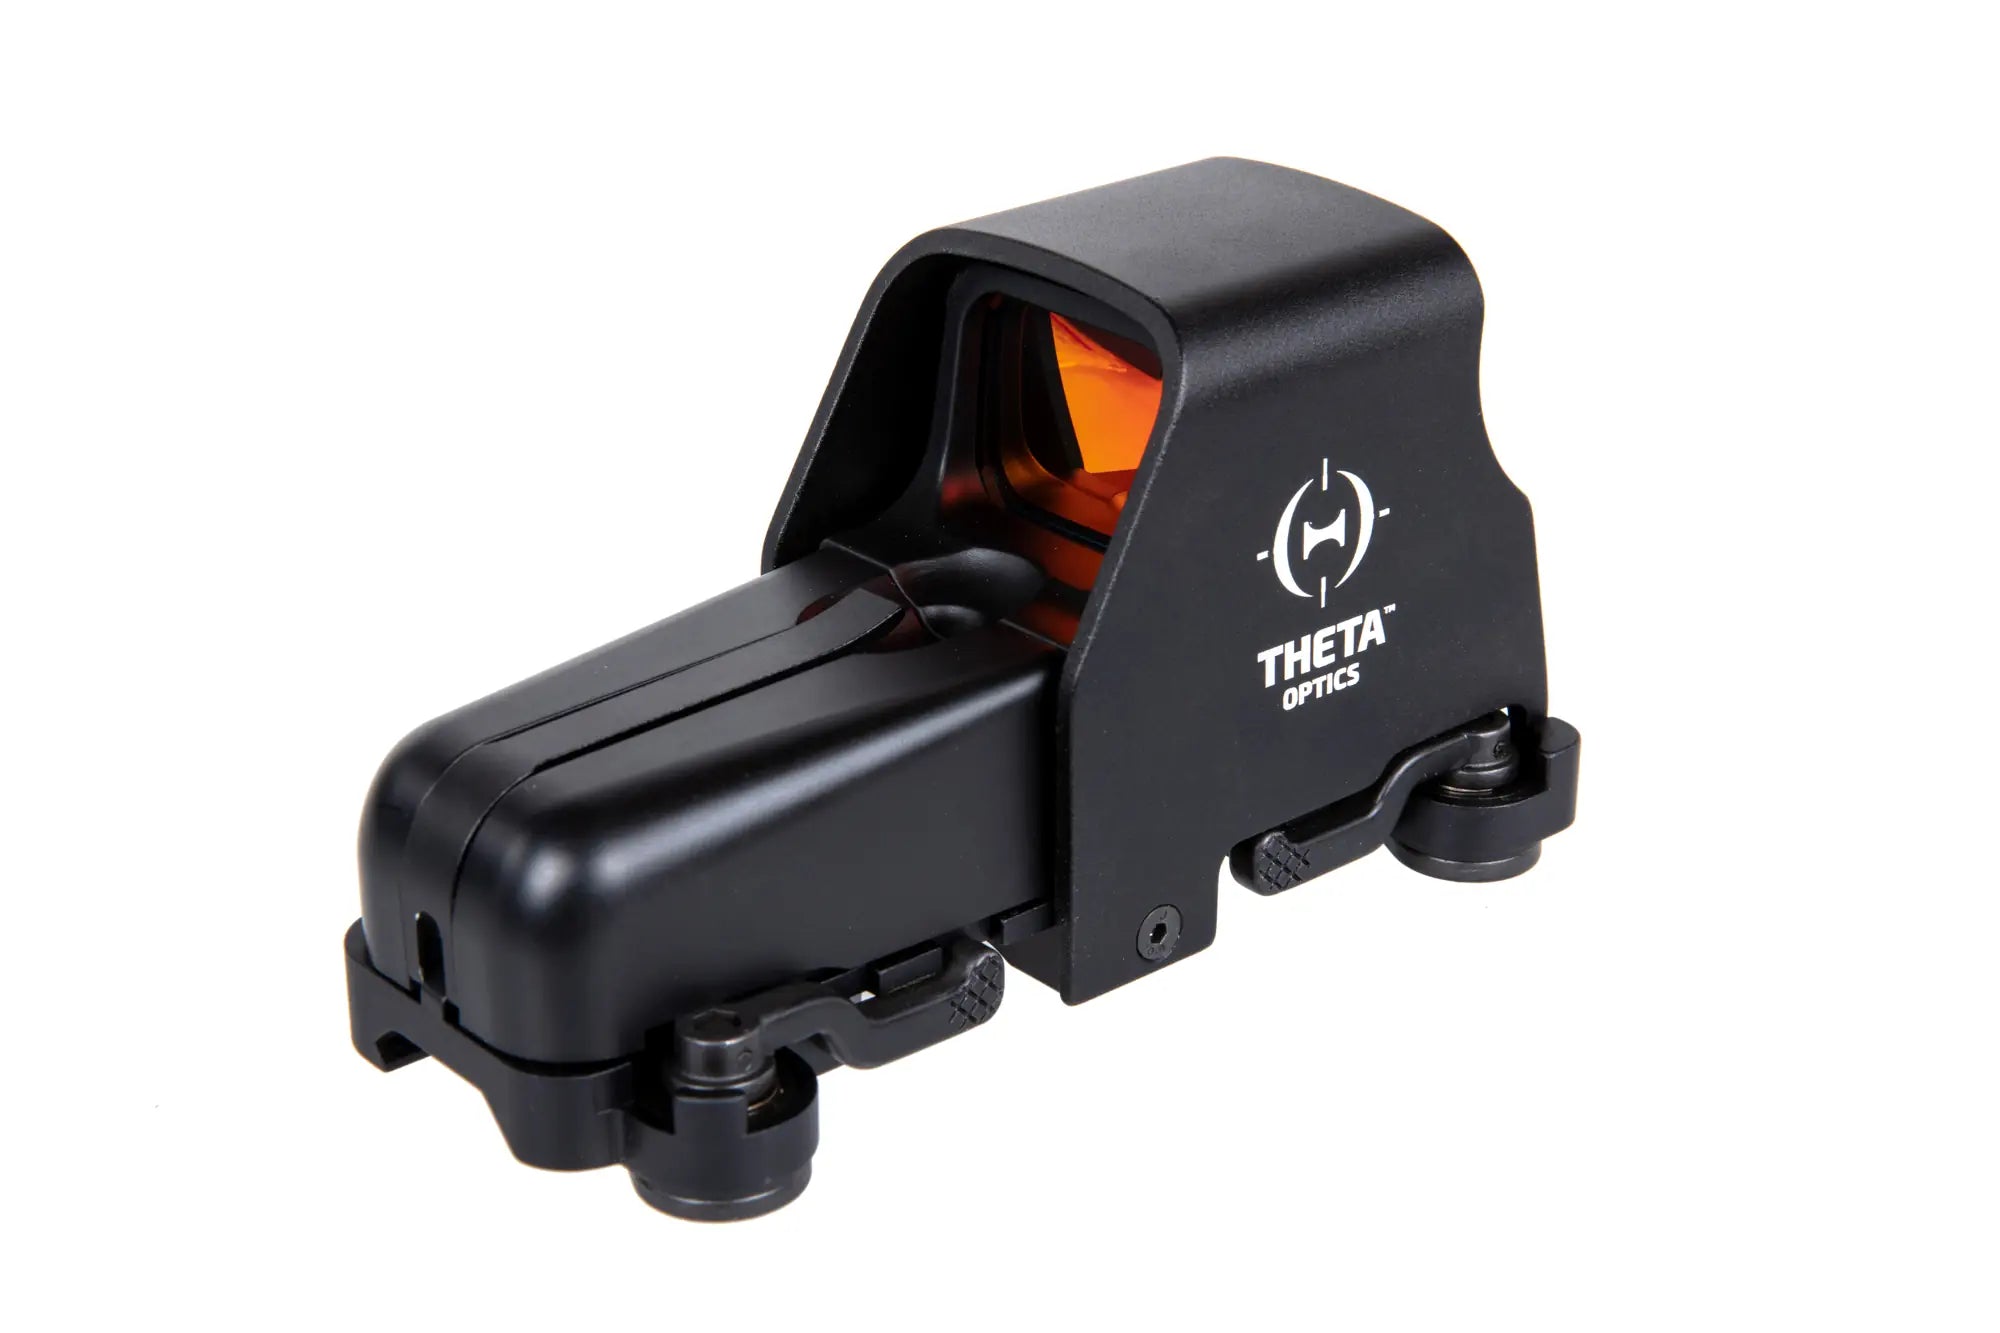 Theta Optics TO553 Red Glass replica collimator sight Black